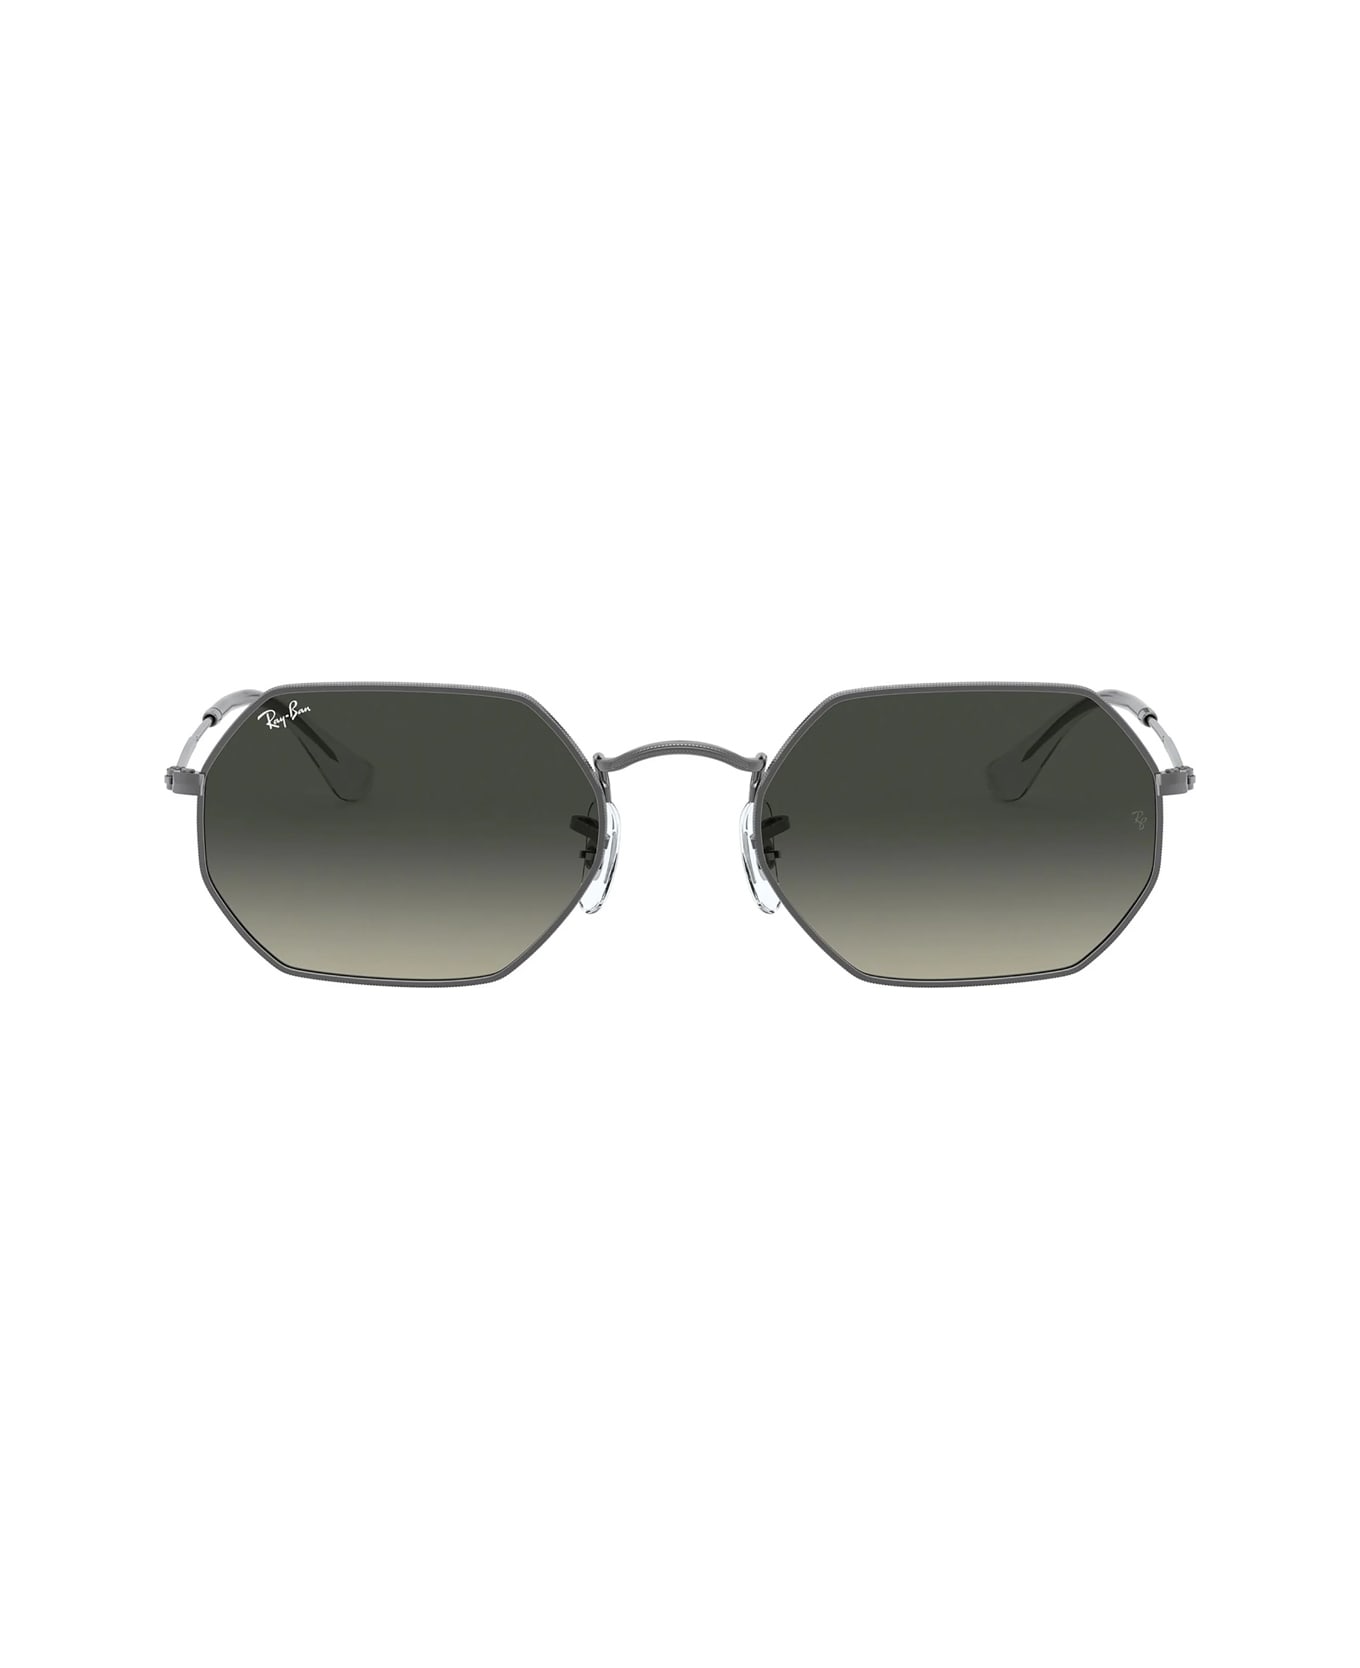 Ray-Ban Rb3556n Octagonal Sunglasses - Nero サングラス